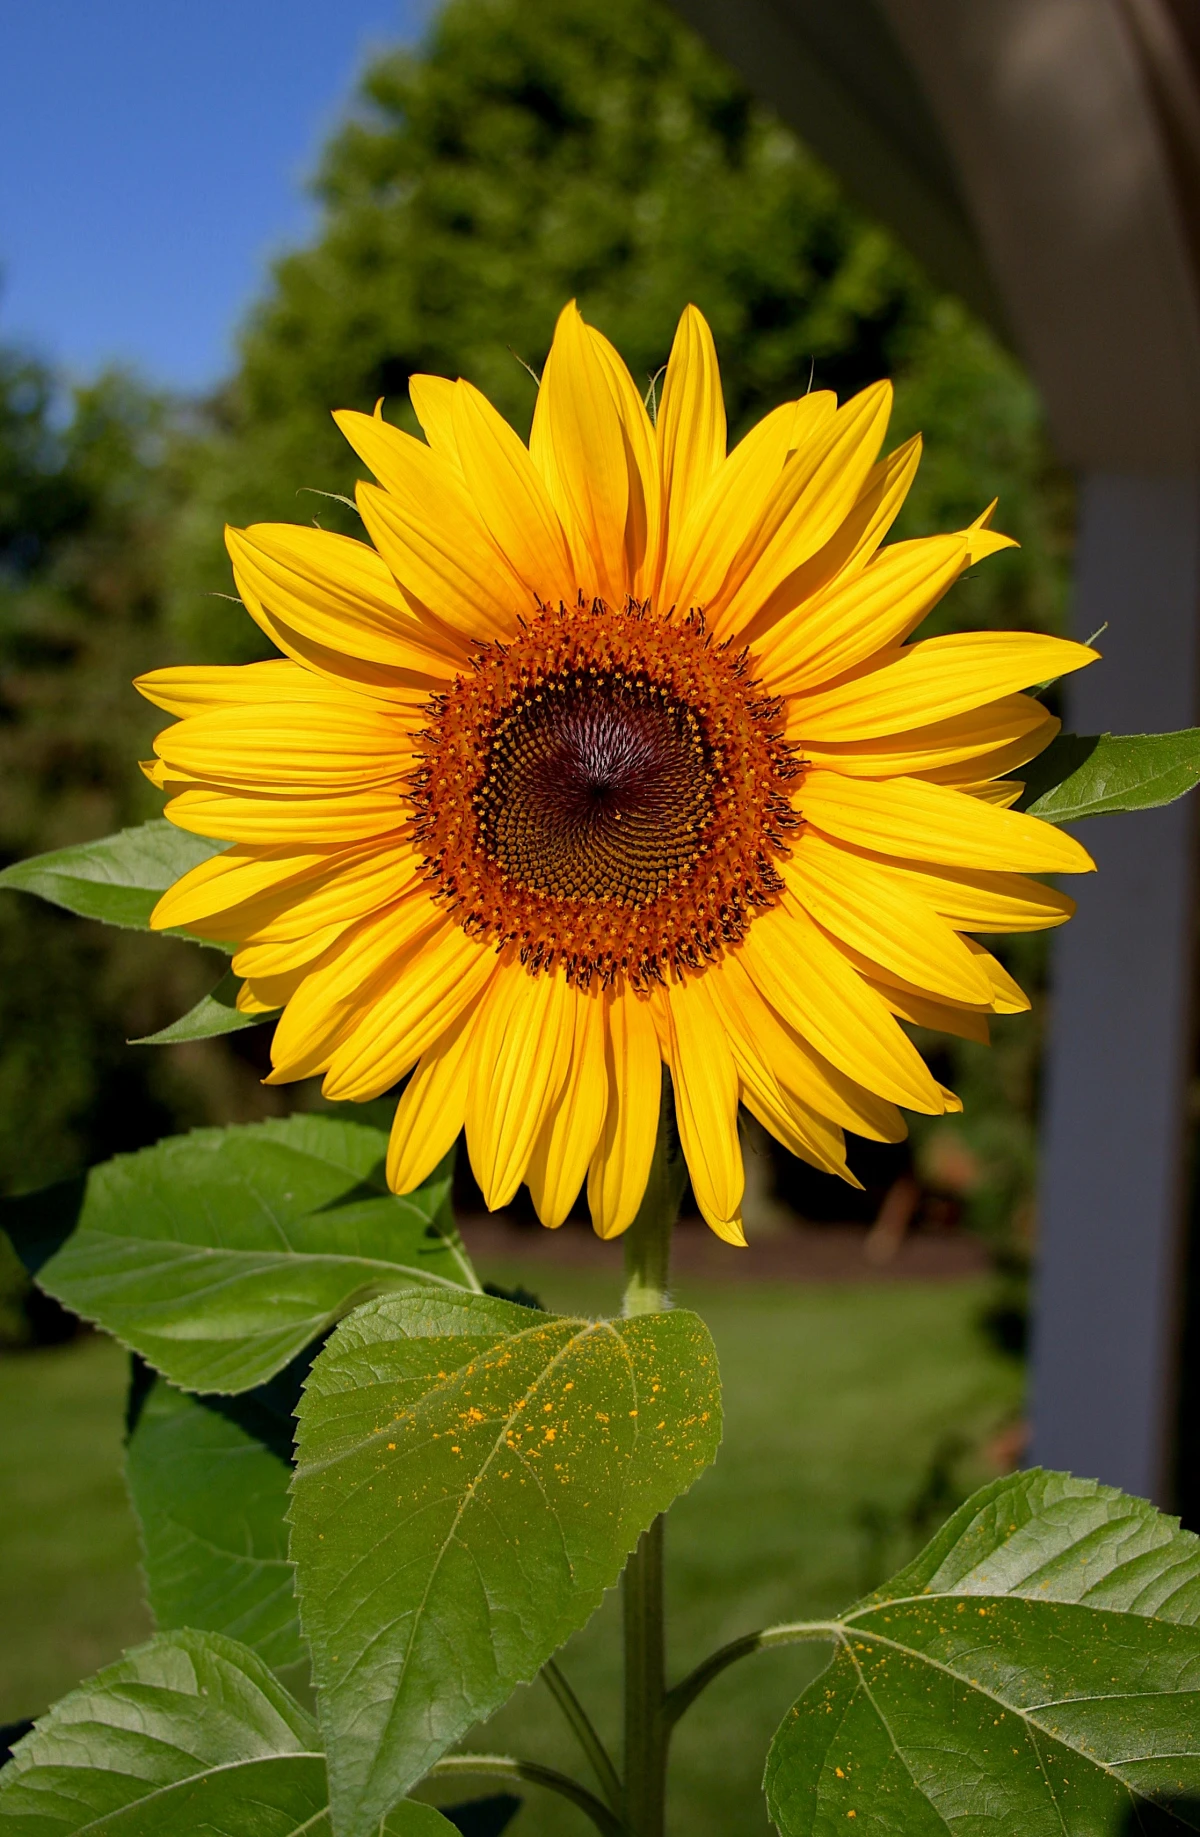 sunflower plant growing